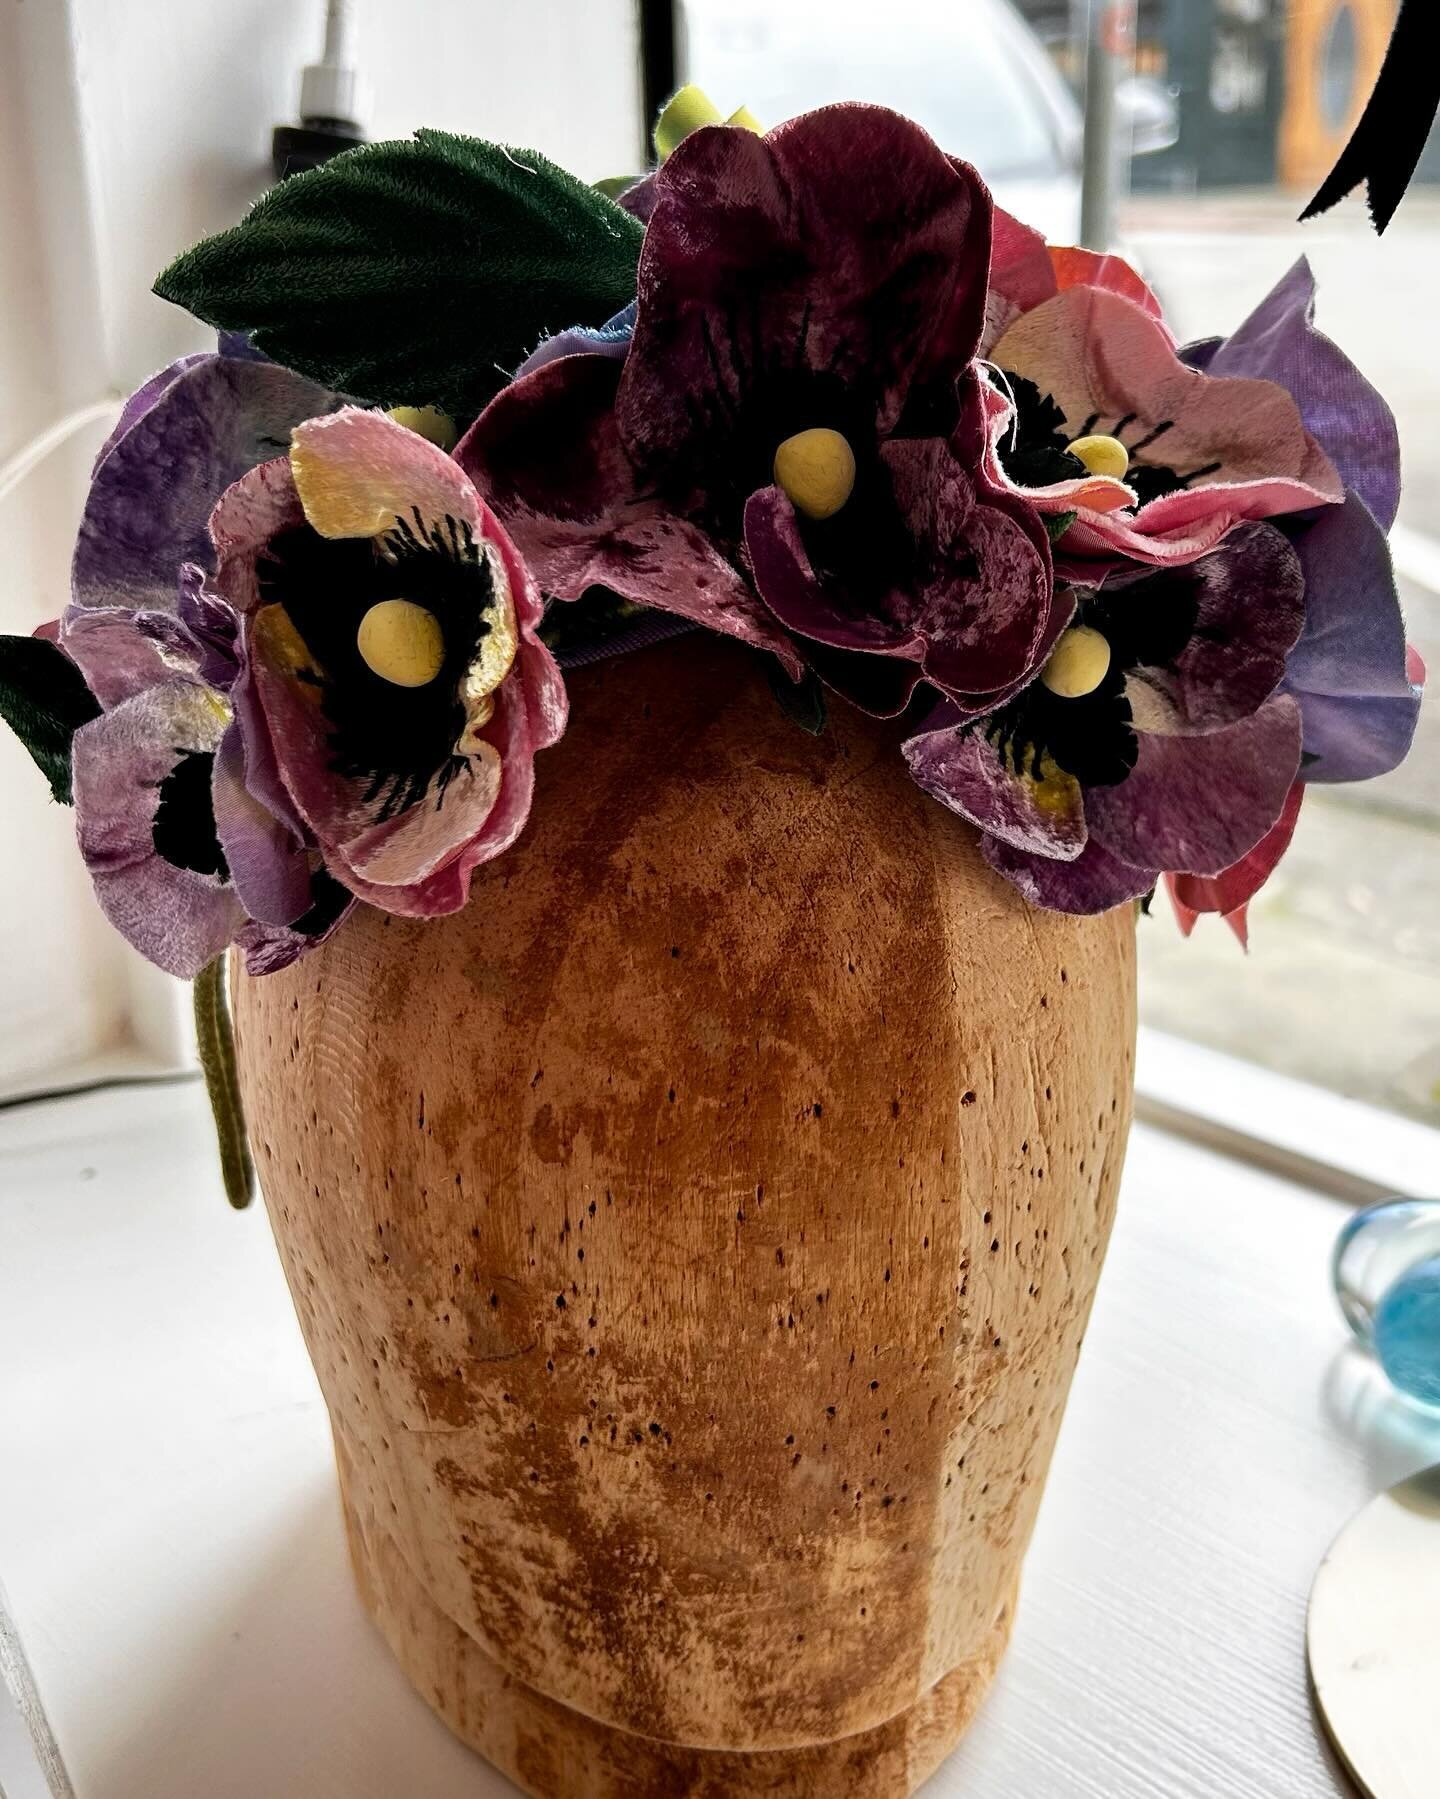 Velvet pansy crown. Why not wear a bouquet?
#handmadehats #velvetflowers #shopsananselmo #madeinmarin